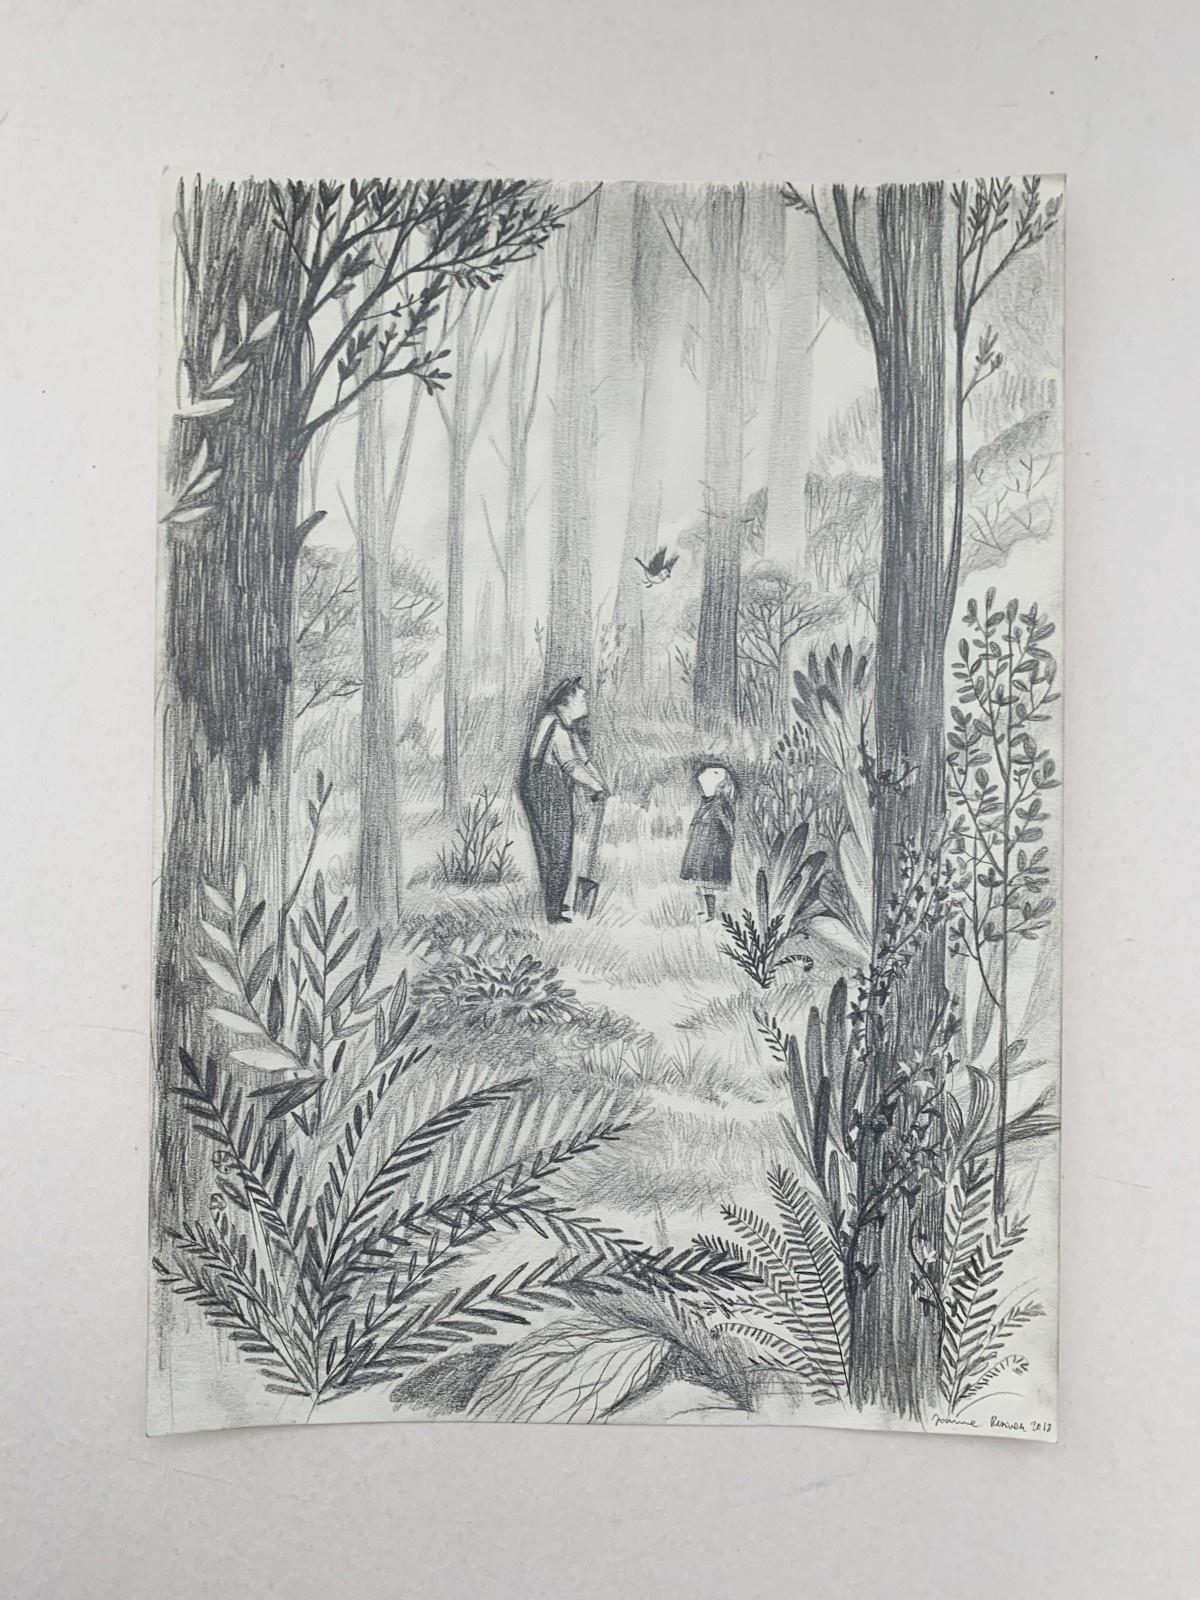 Secret garden - Book illustration, Polish artist, Pencil drawing - Art by Joanna Rusinek